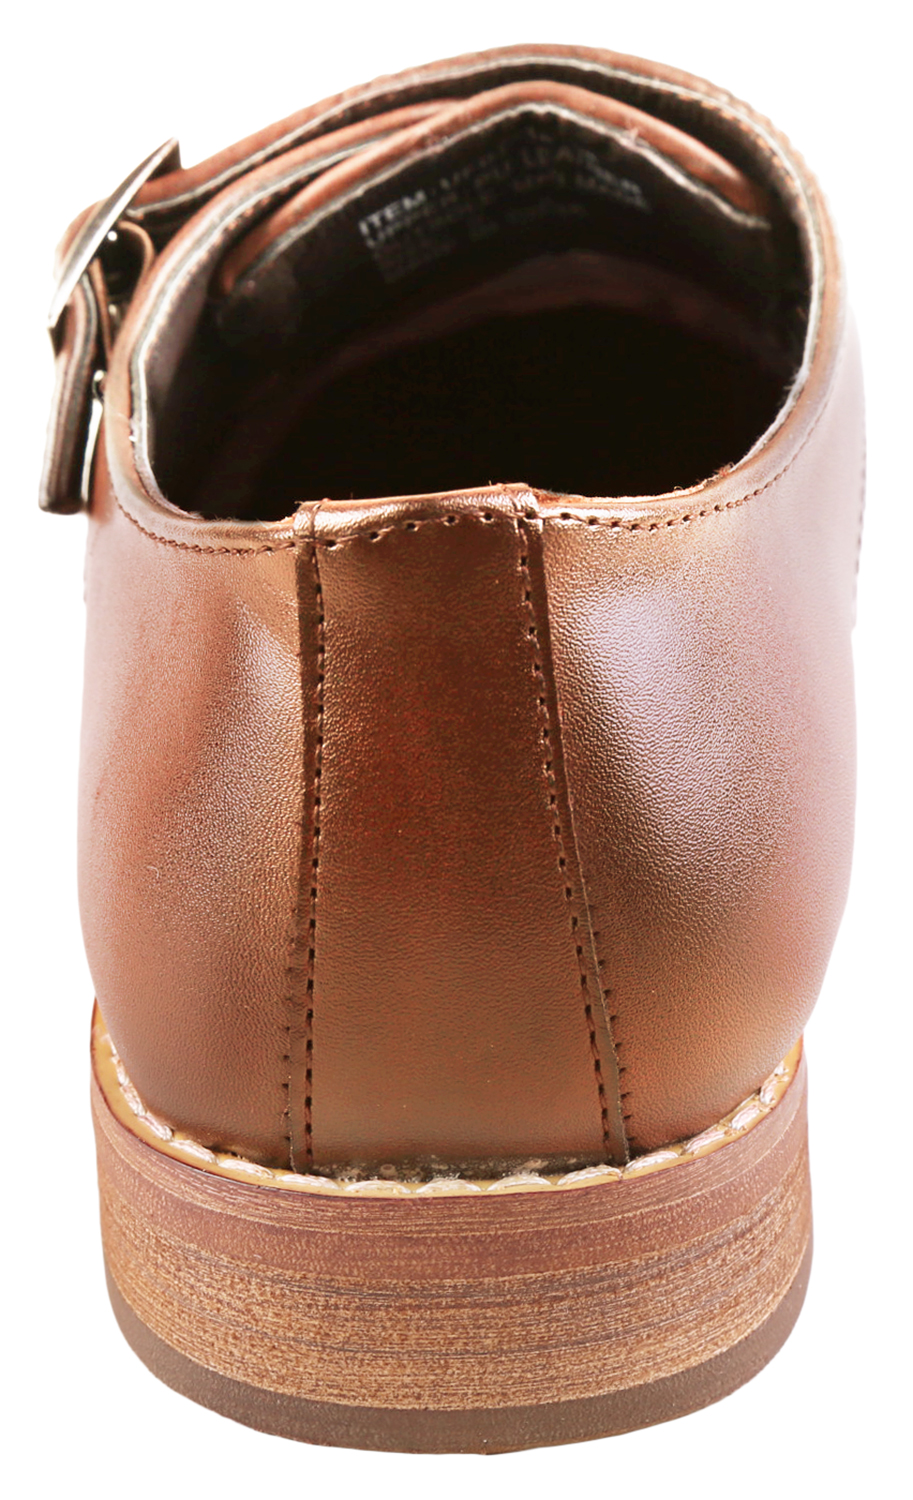 Urban Fox Allen Men's Dress Shoe | Double Monk Strap | Brogue | Wingtip Shoes for Men | Light Brown 9 M US - image 4 of 7